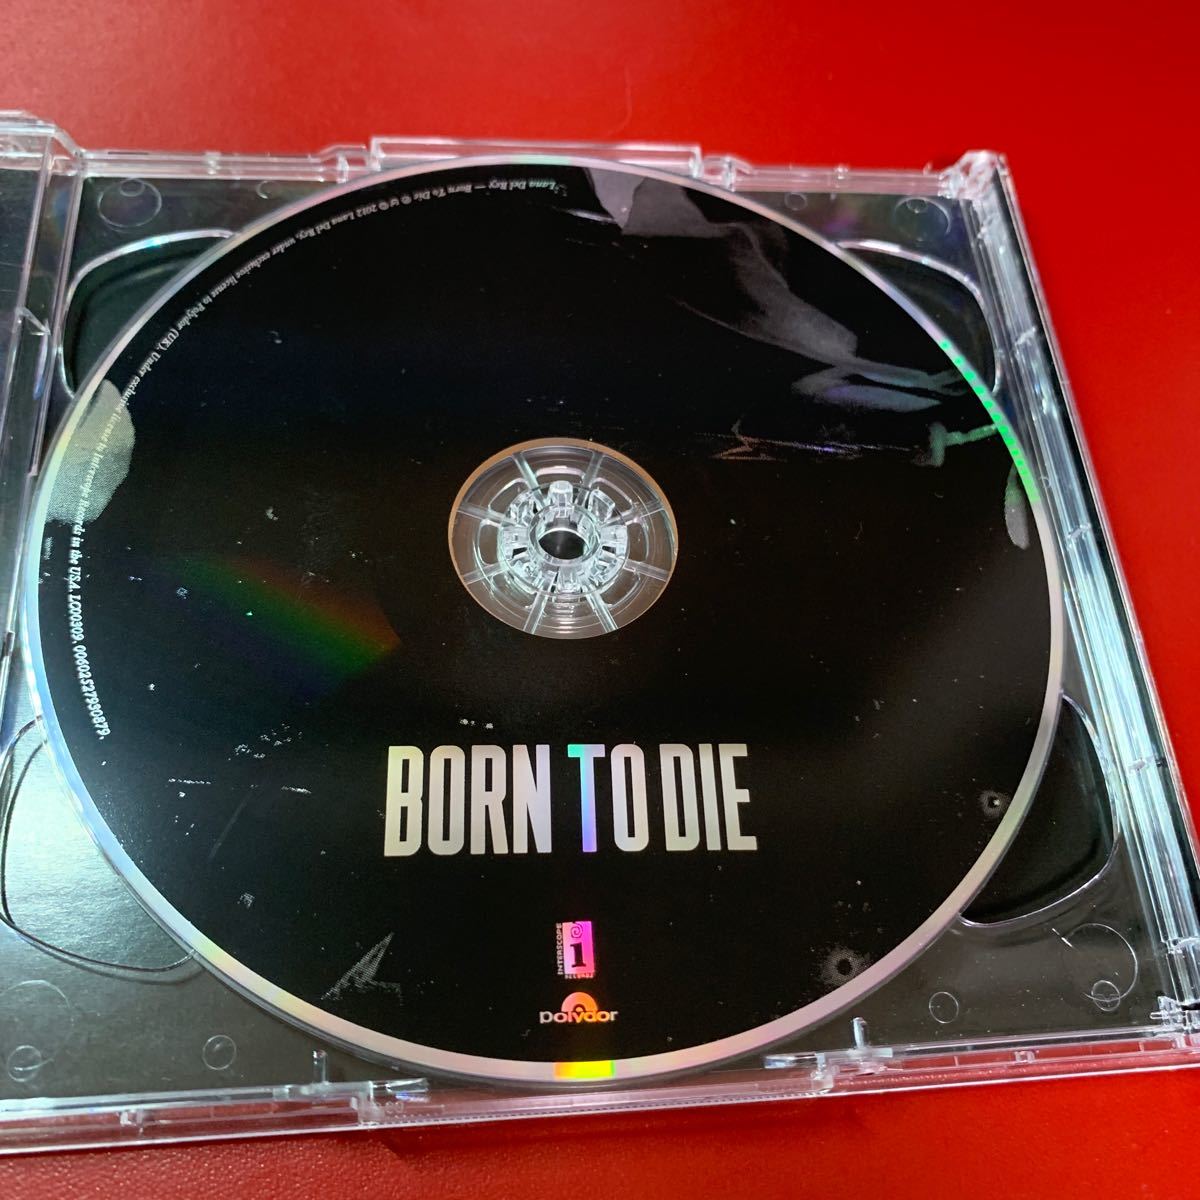 Lana Del Rey/Born To Die